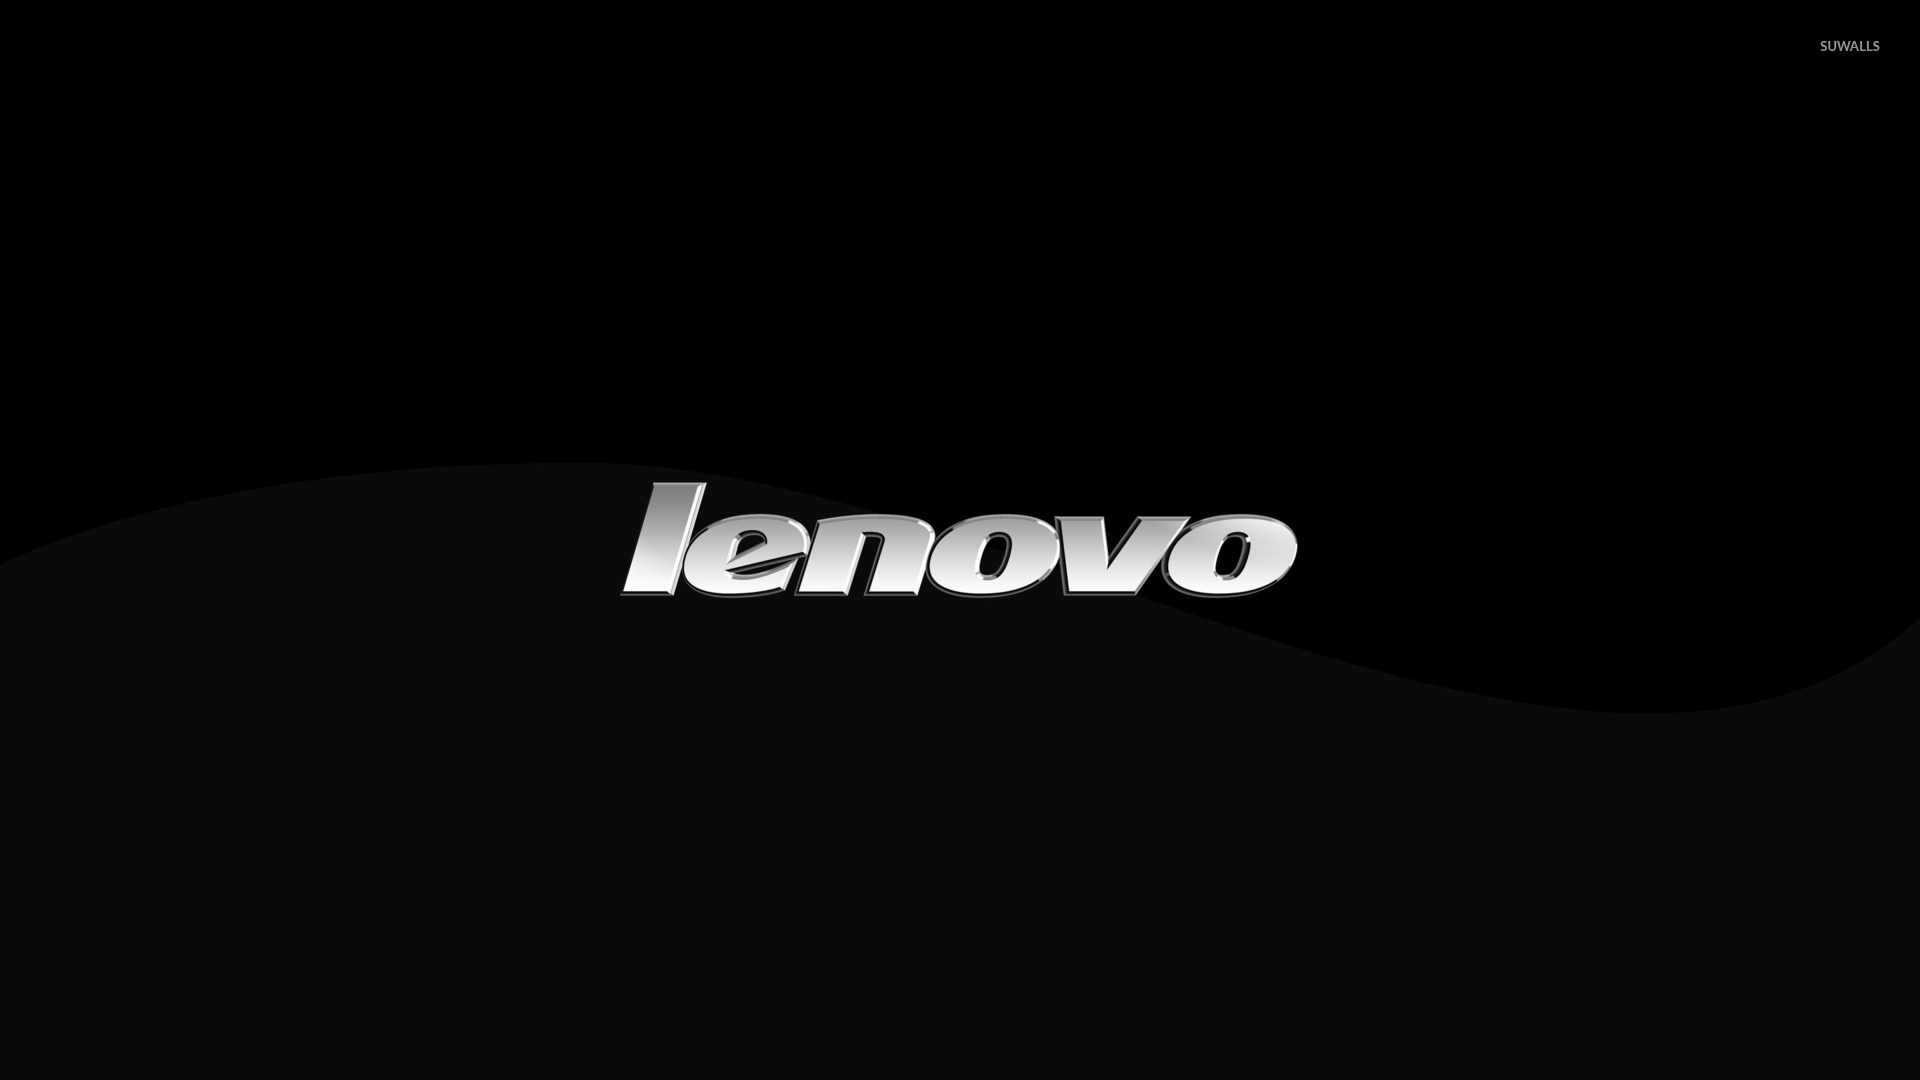 Lenovo wallpaper   Computer wallpapers   26309